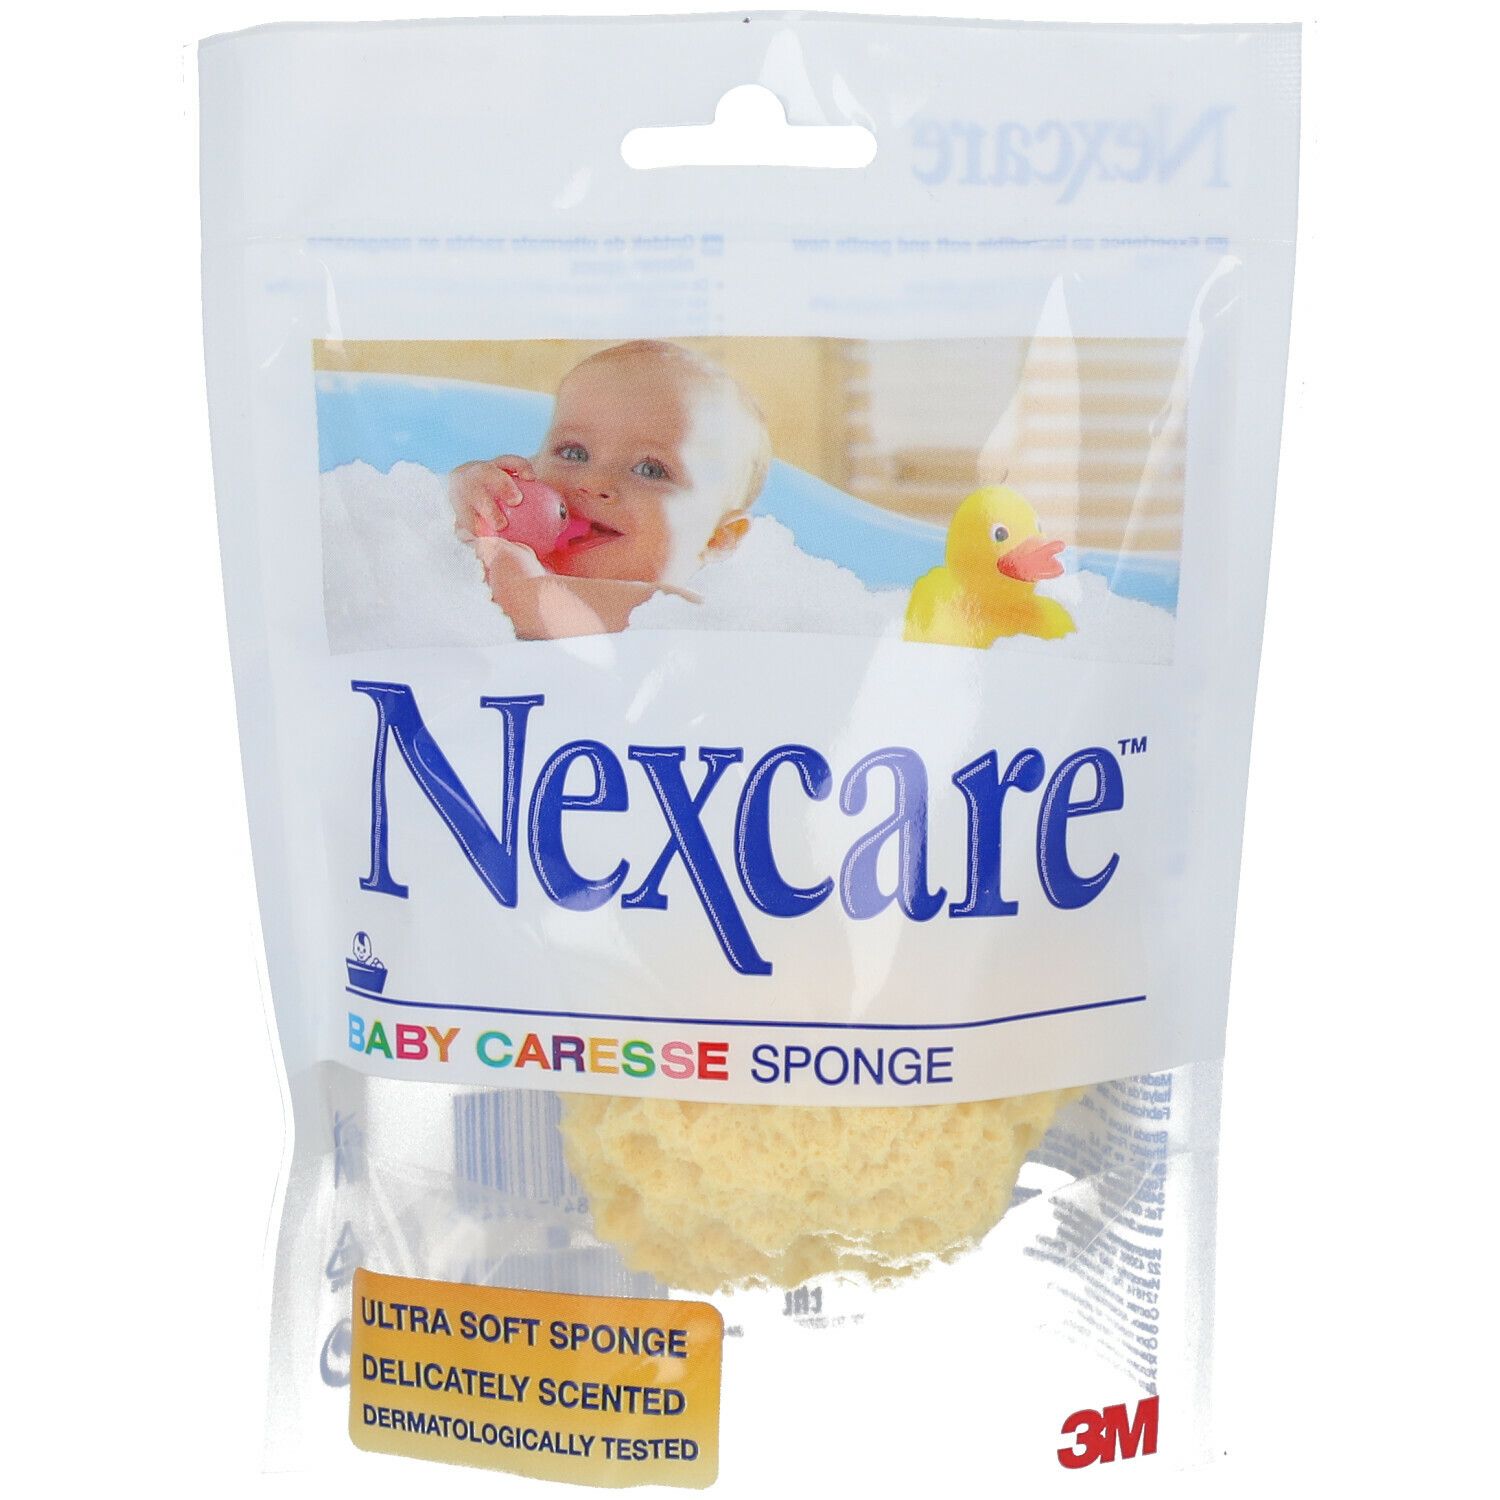 Nexcare™ Baby Caresse Sponge Gialla